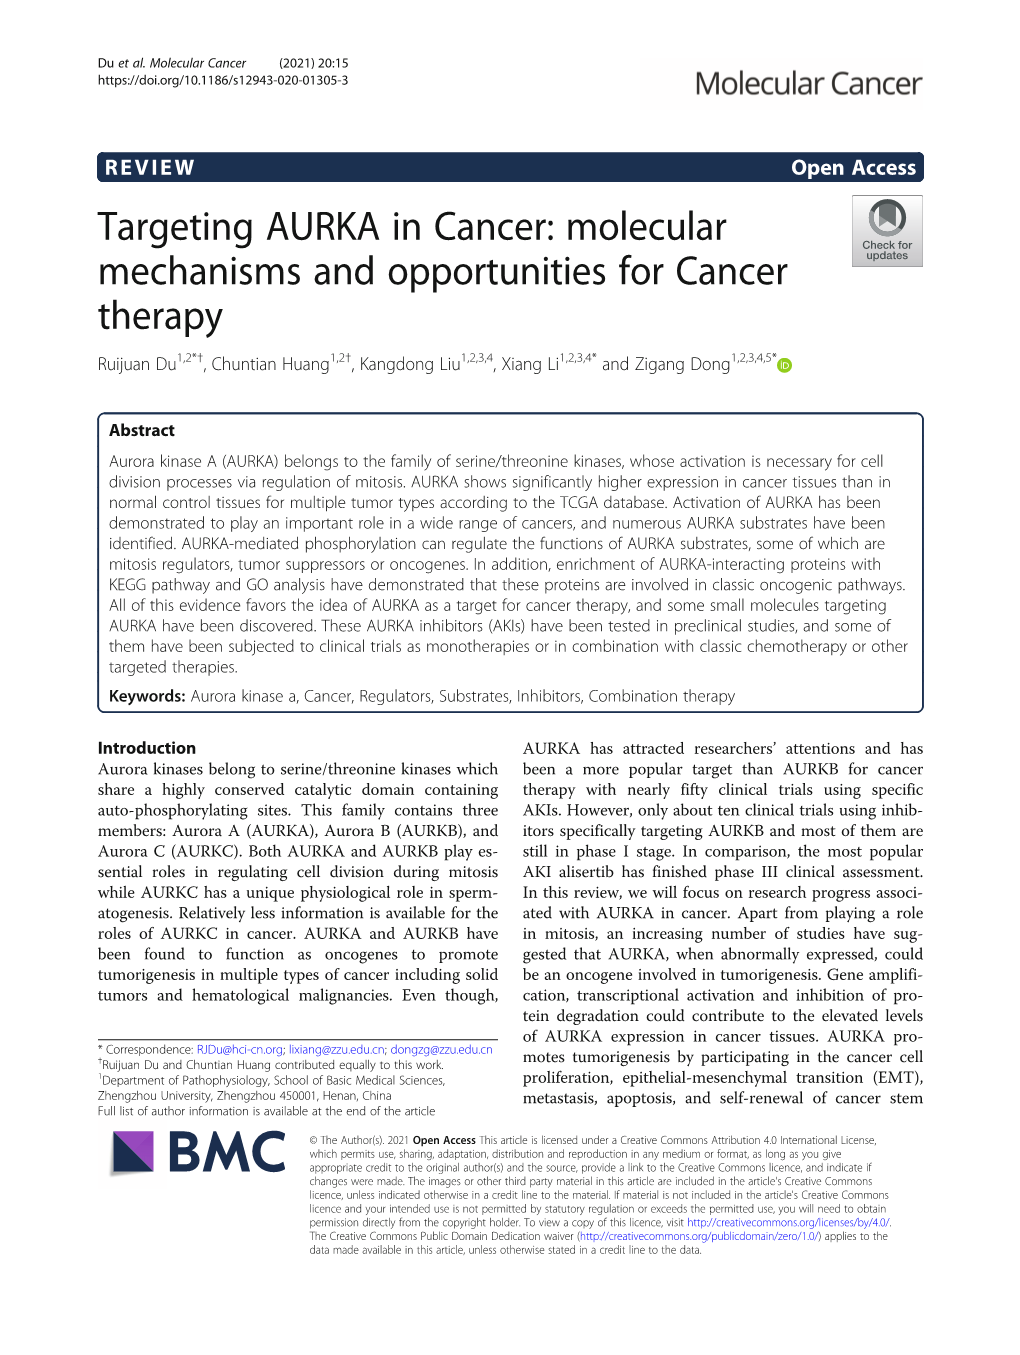 Targeting AURKA in Cancer: Molecular Mechanisms And